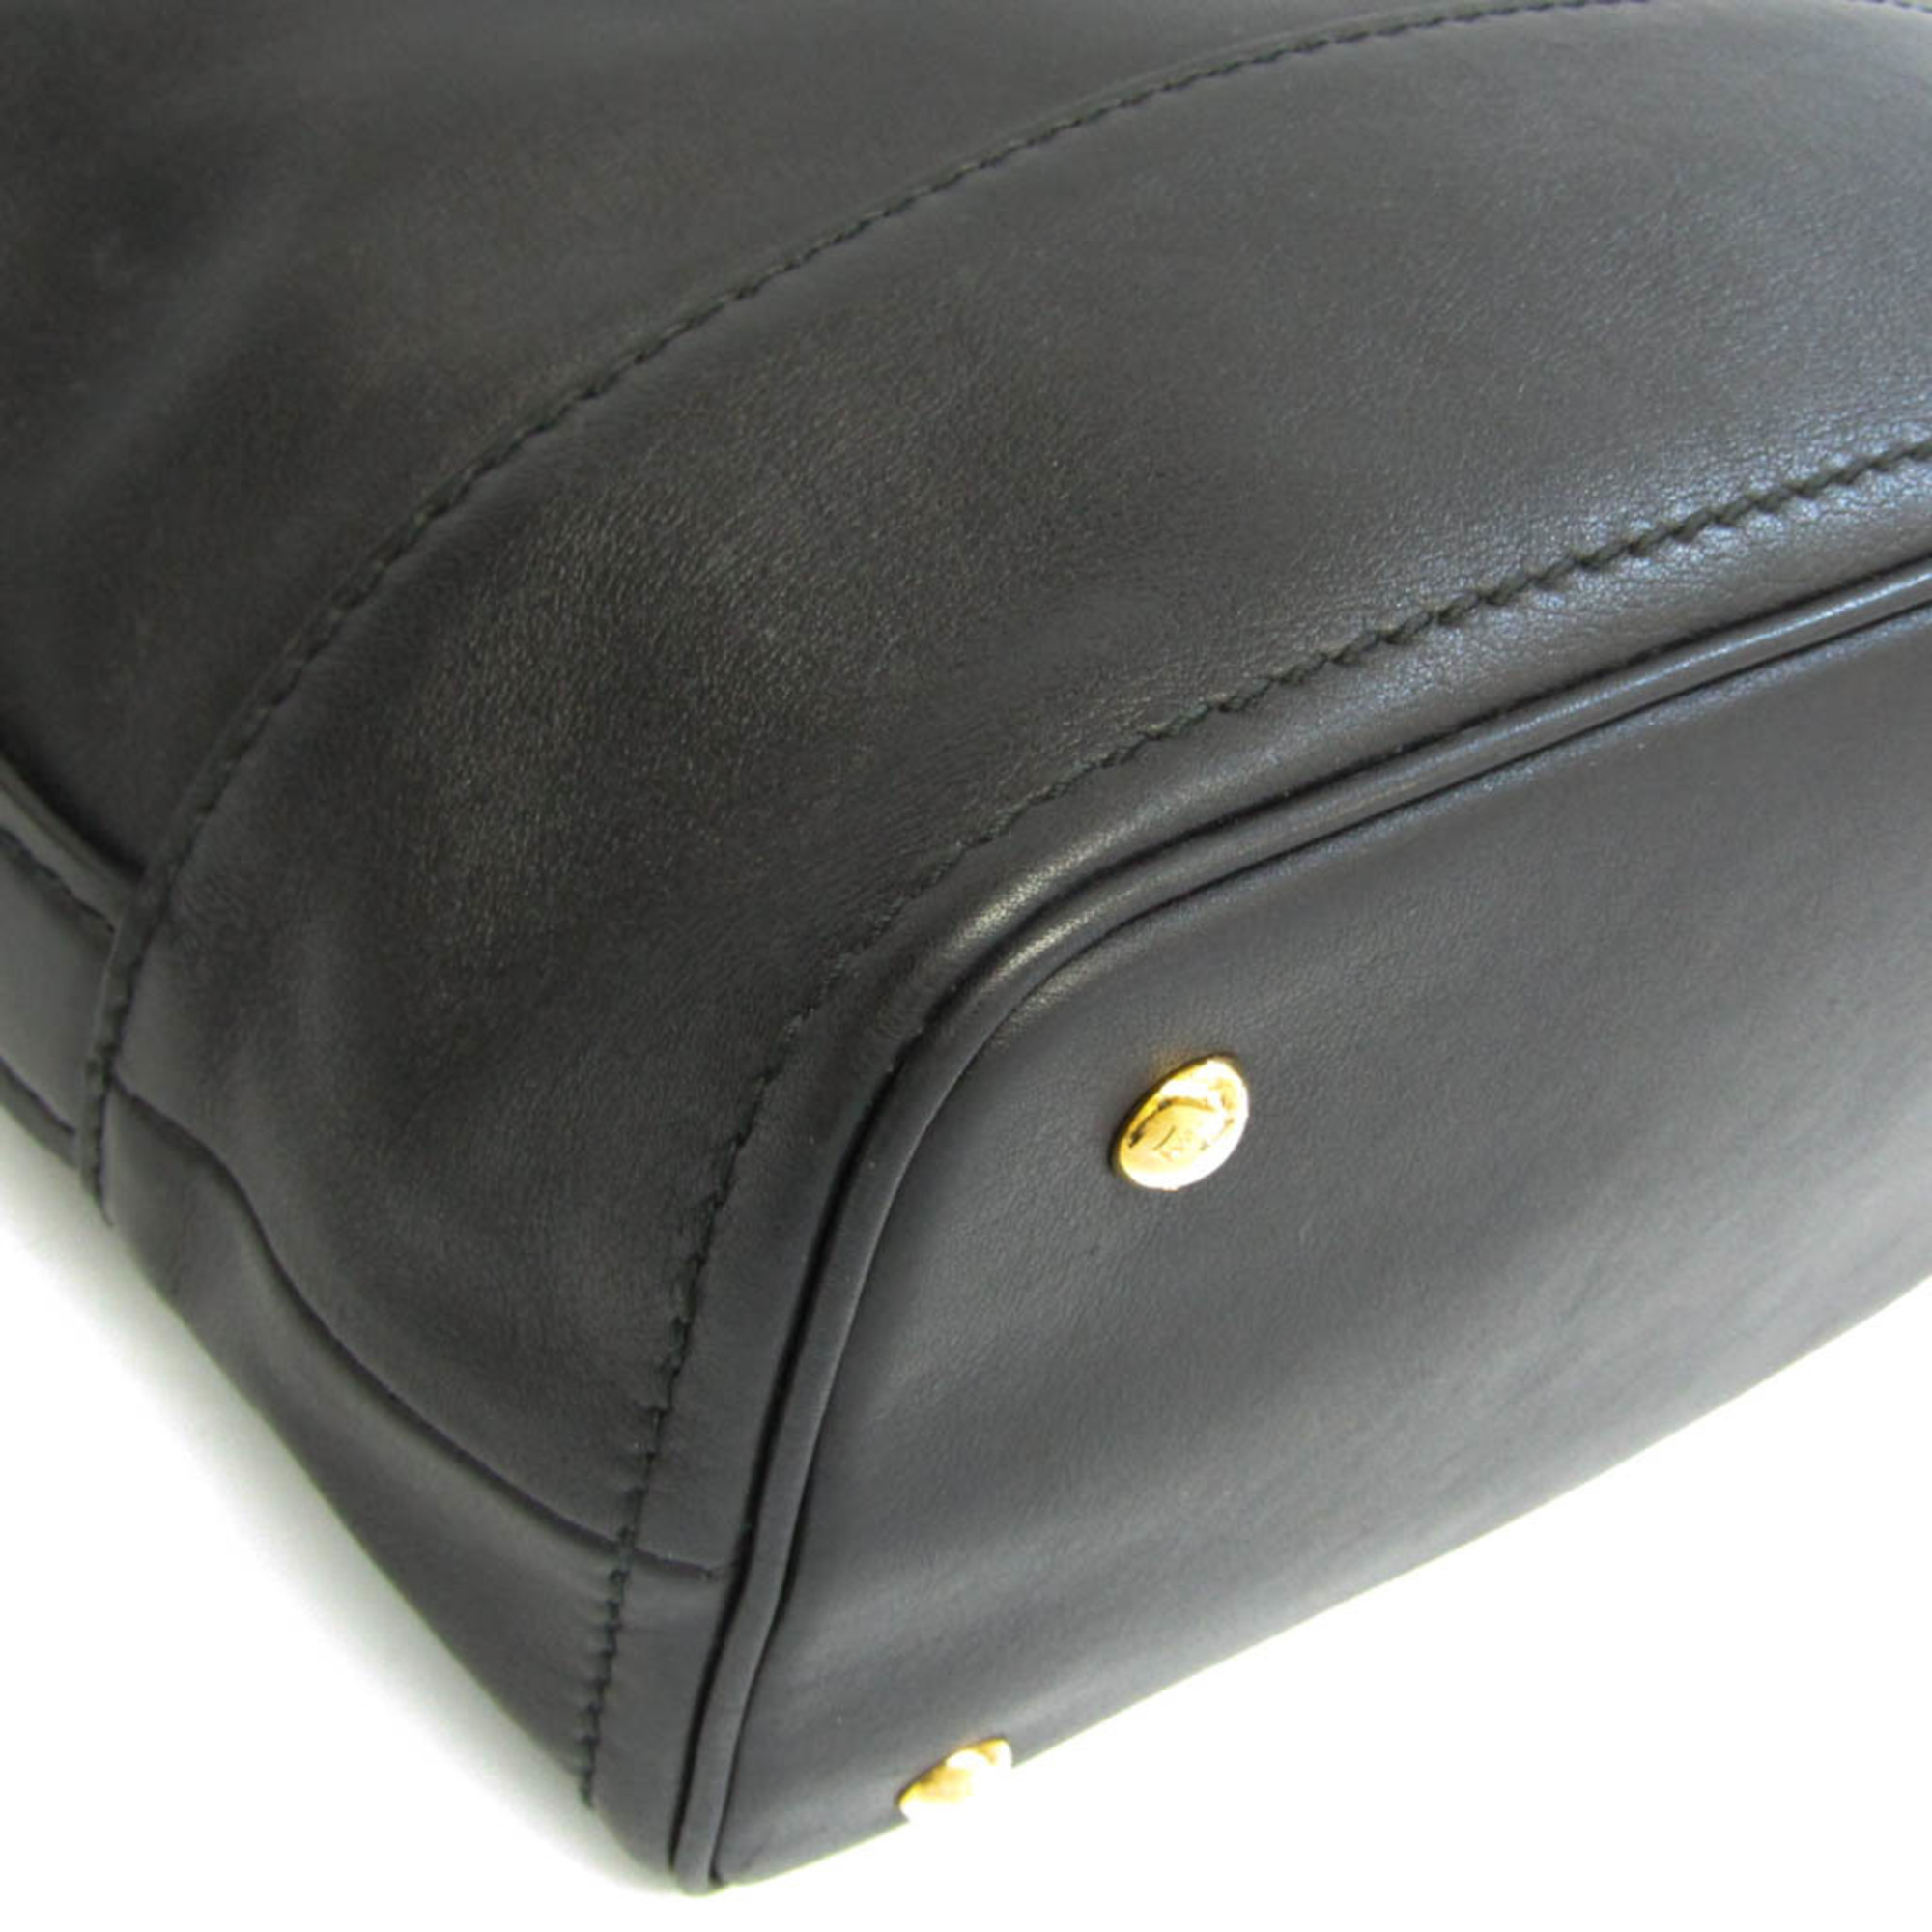 Salvatore Ferragamo GG-21D338 Women's Leather Shoulder Bag Black